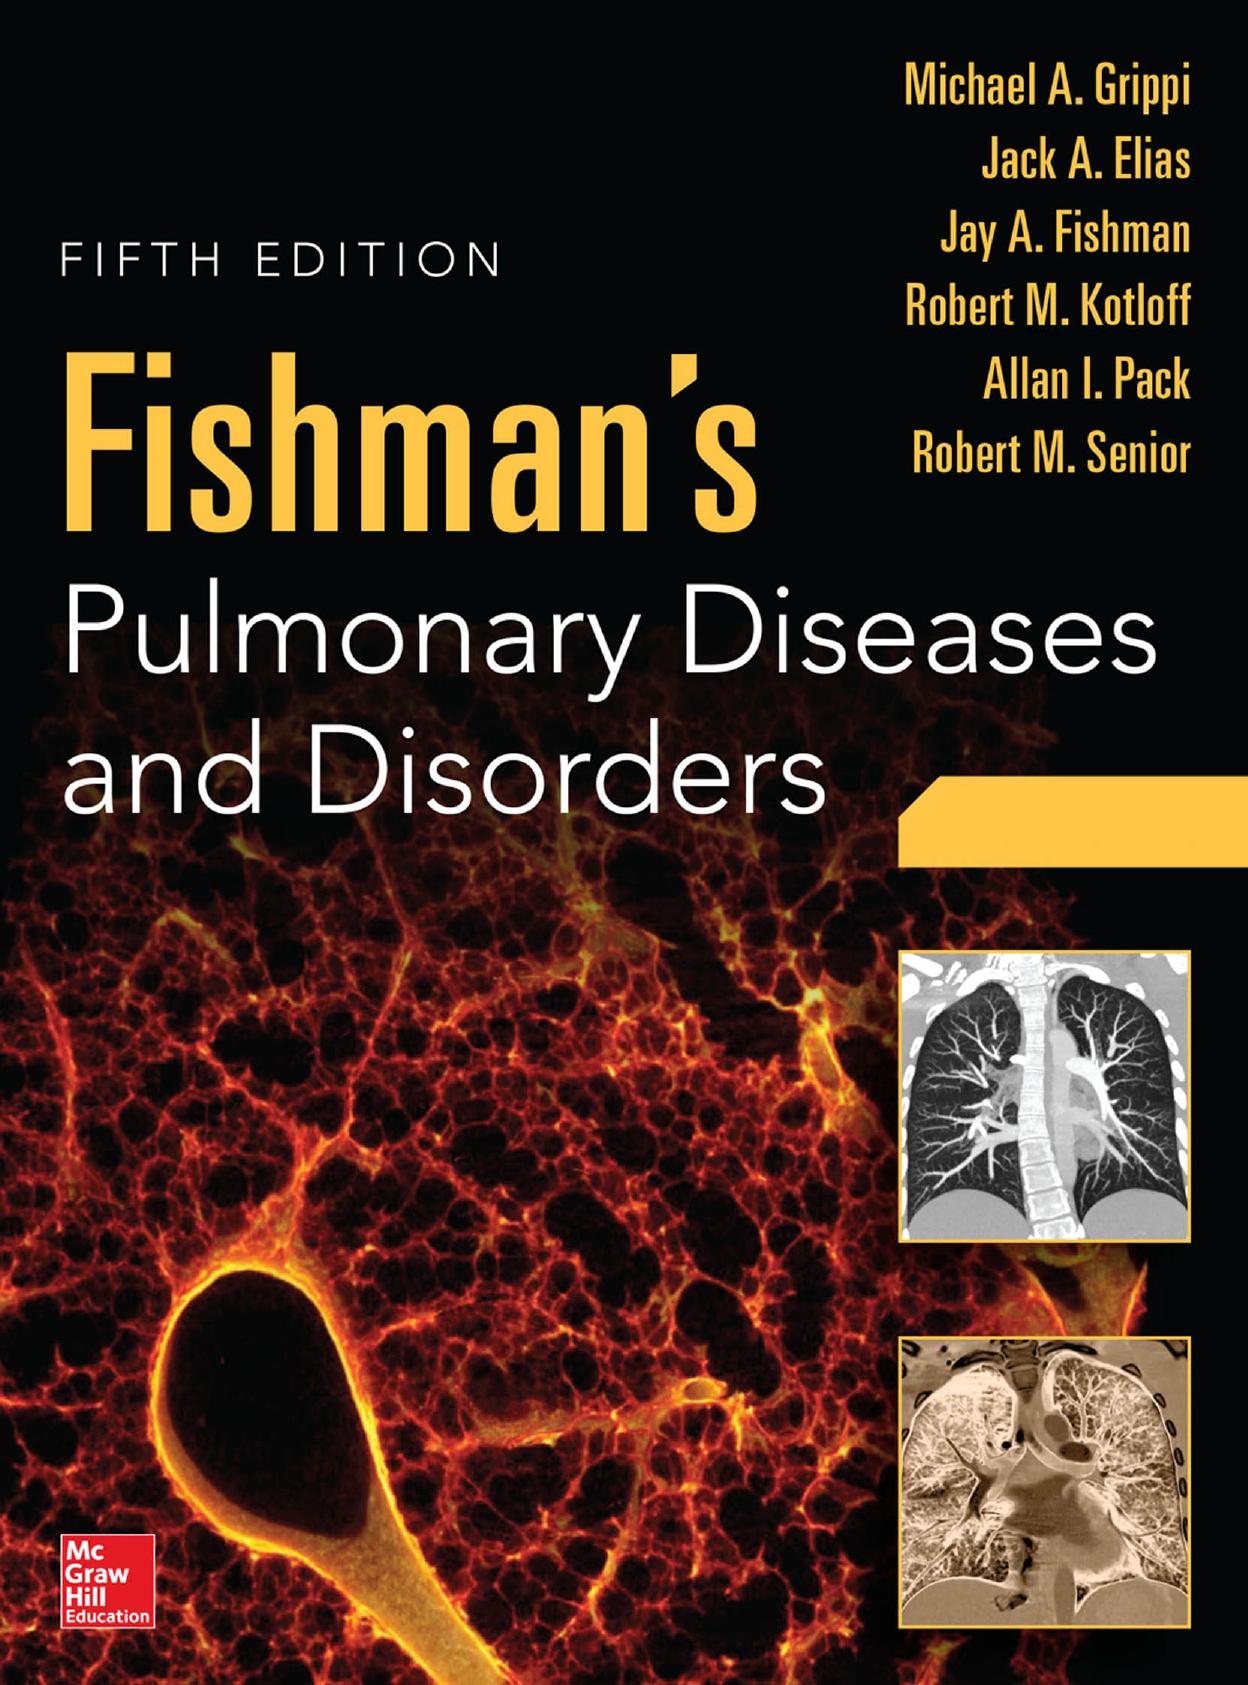 Fishman's Pulmonary Diseases and Disorders, 2-Volume Set,5th - Michael A. Grippi_Jack A. Elias_Jay A. Fishman_Robert M. Kotloff_Allan I. Pack & Robert M. Senior.jpg